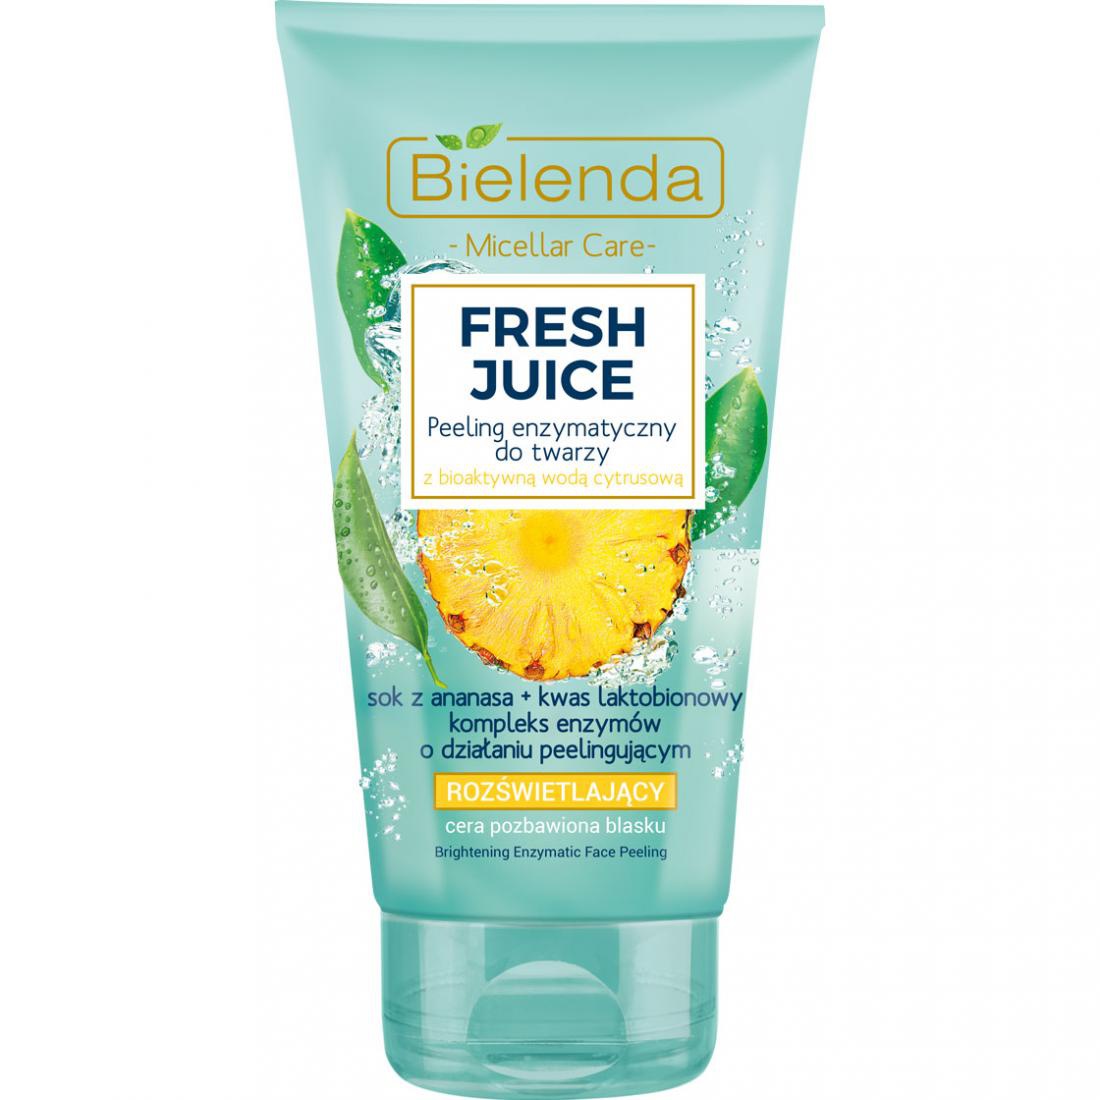 Bielenda Fresh Juice Brightening Enzymatic Face Peeling